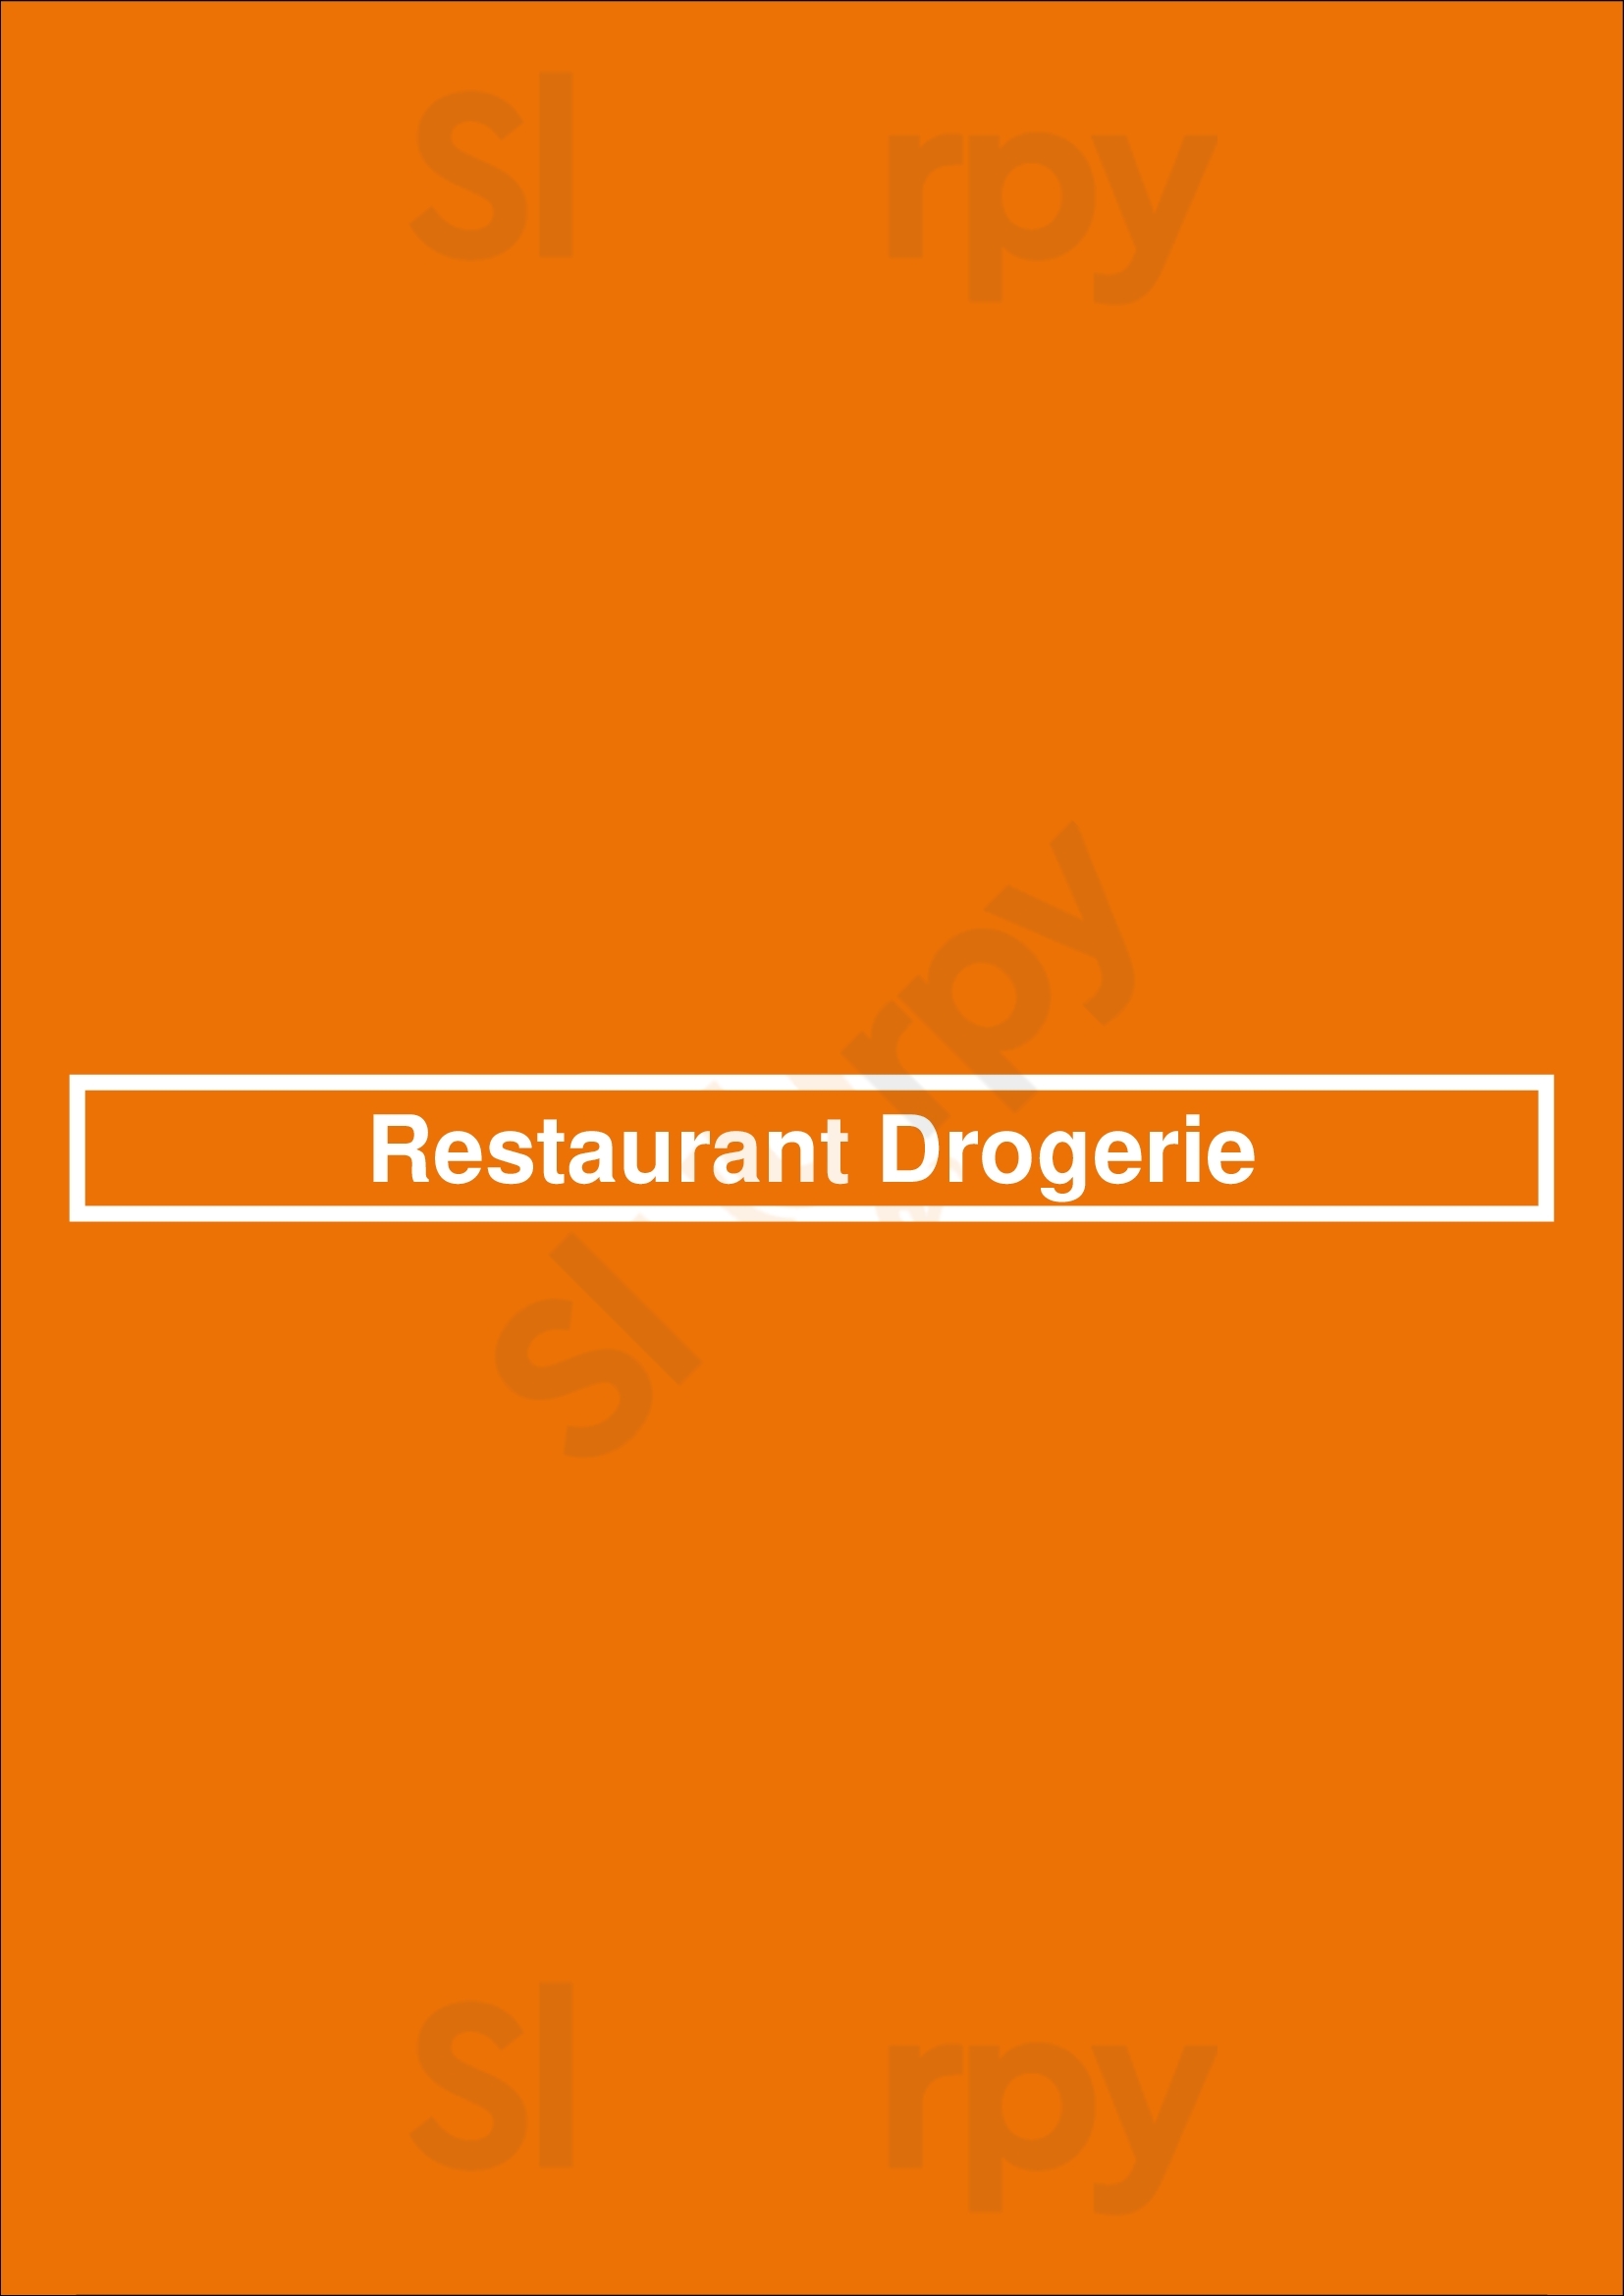 Restaurant Drogerie Leipzig Menu - 1